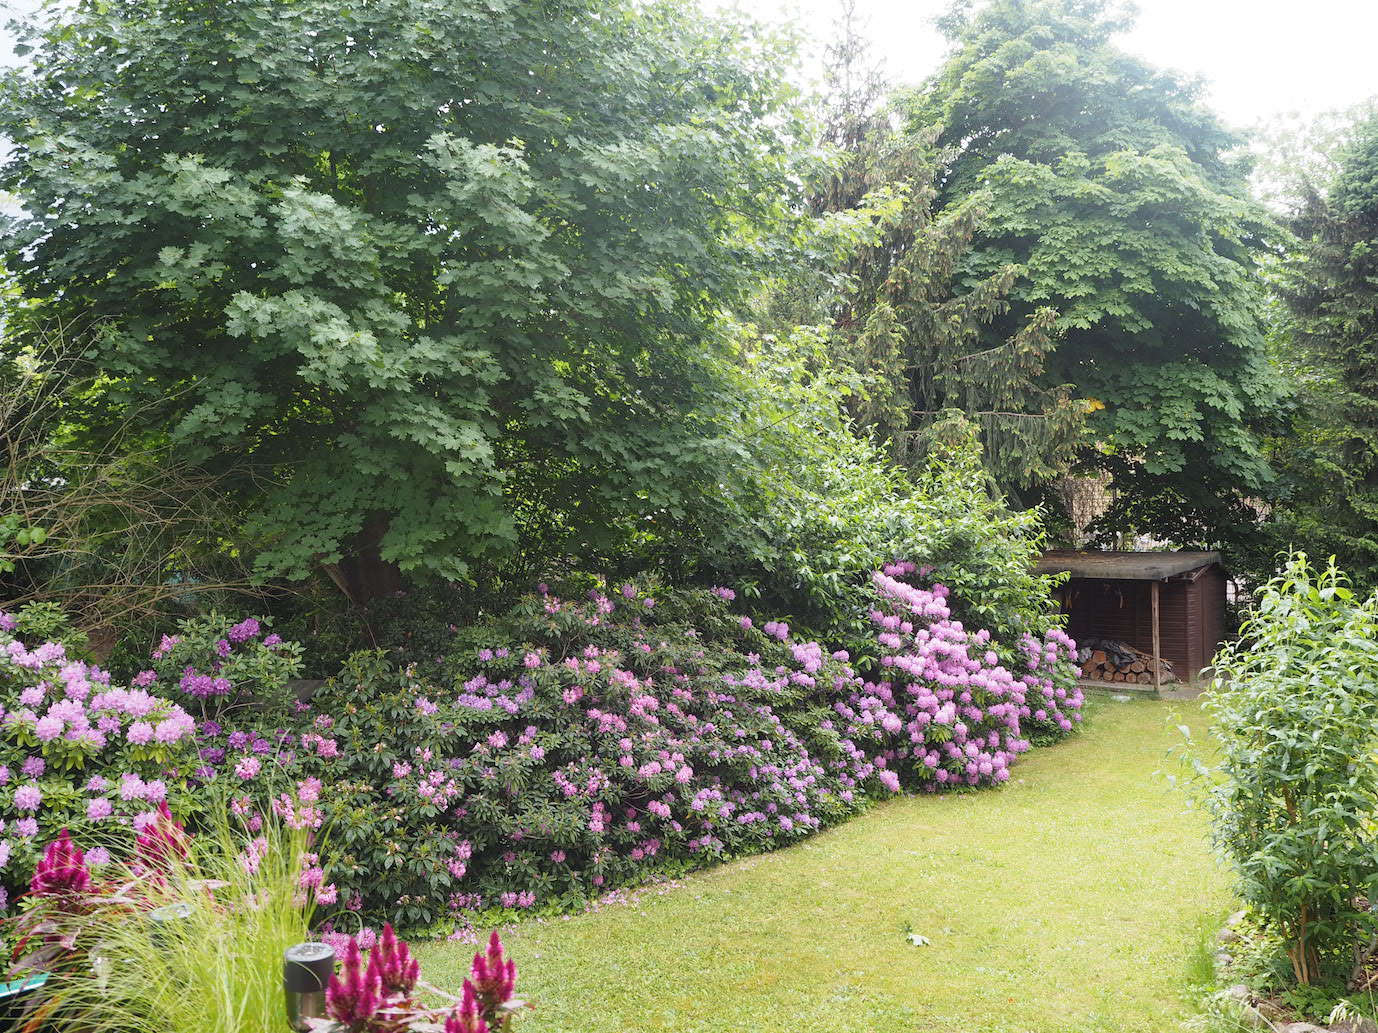 Blick in den Garten im Juni, die Hecke blüht lila